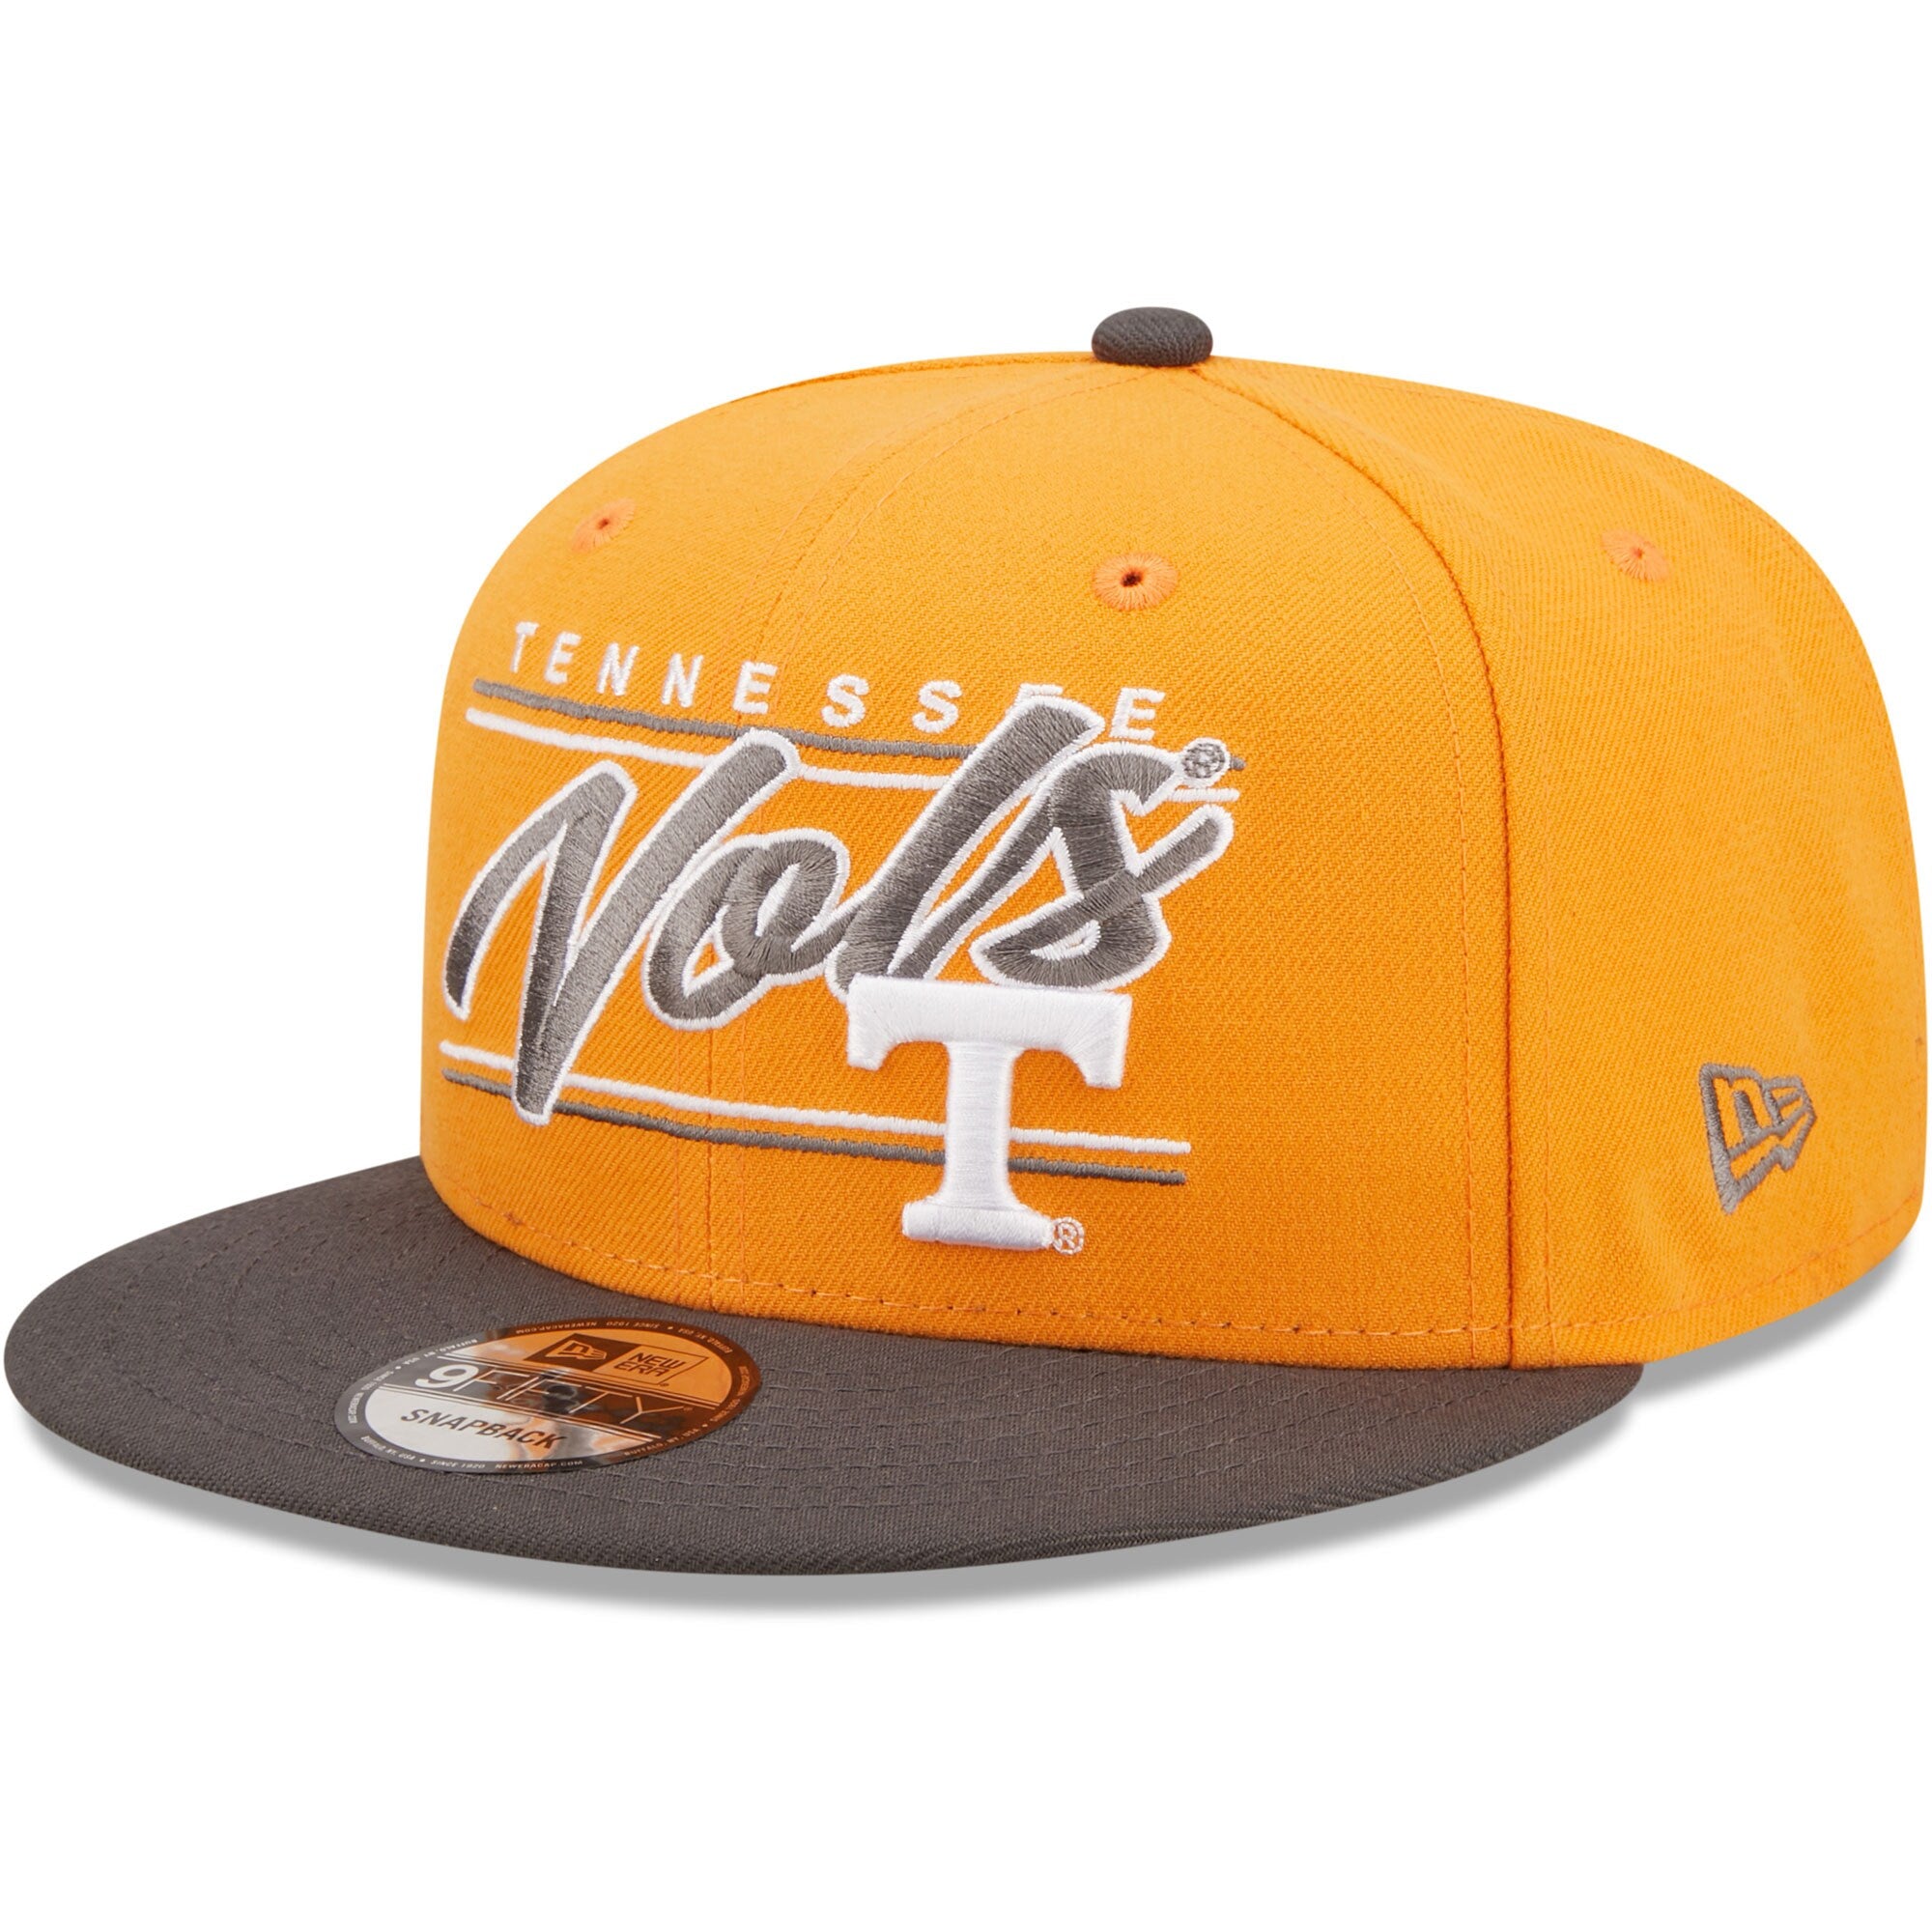 Men's New Era Navy/Orange Virginia Cavaliers Team Script 9FIFTY Snapback Hat